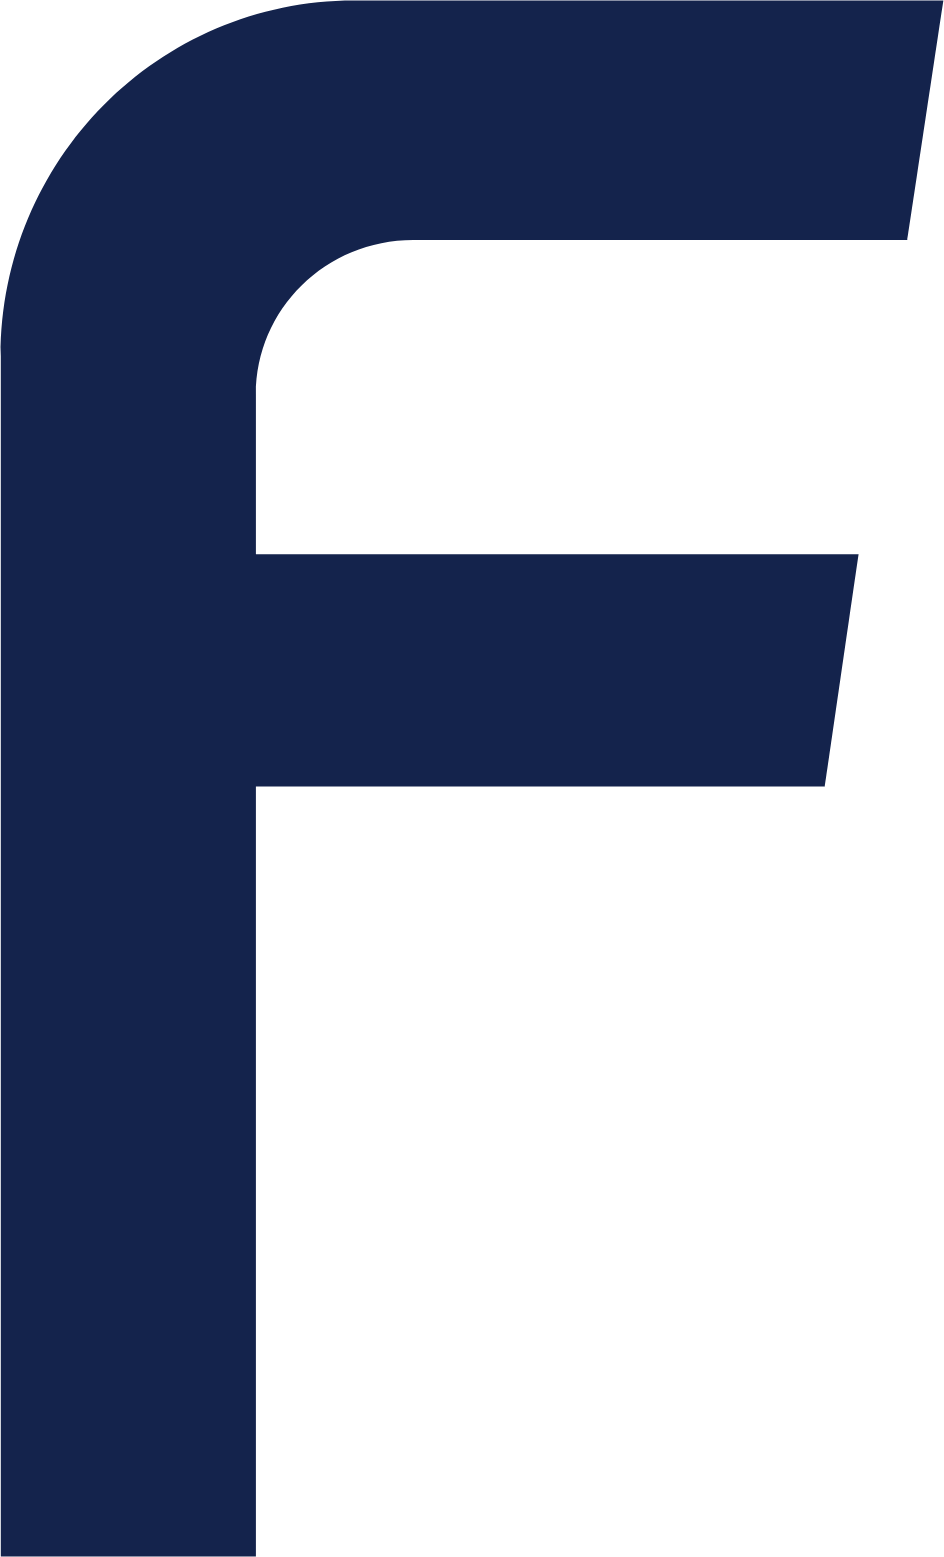 Fertiglobe logo (transparent PNG)